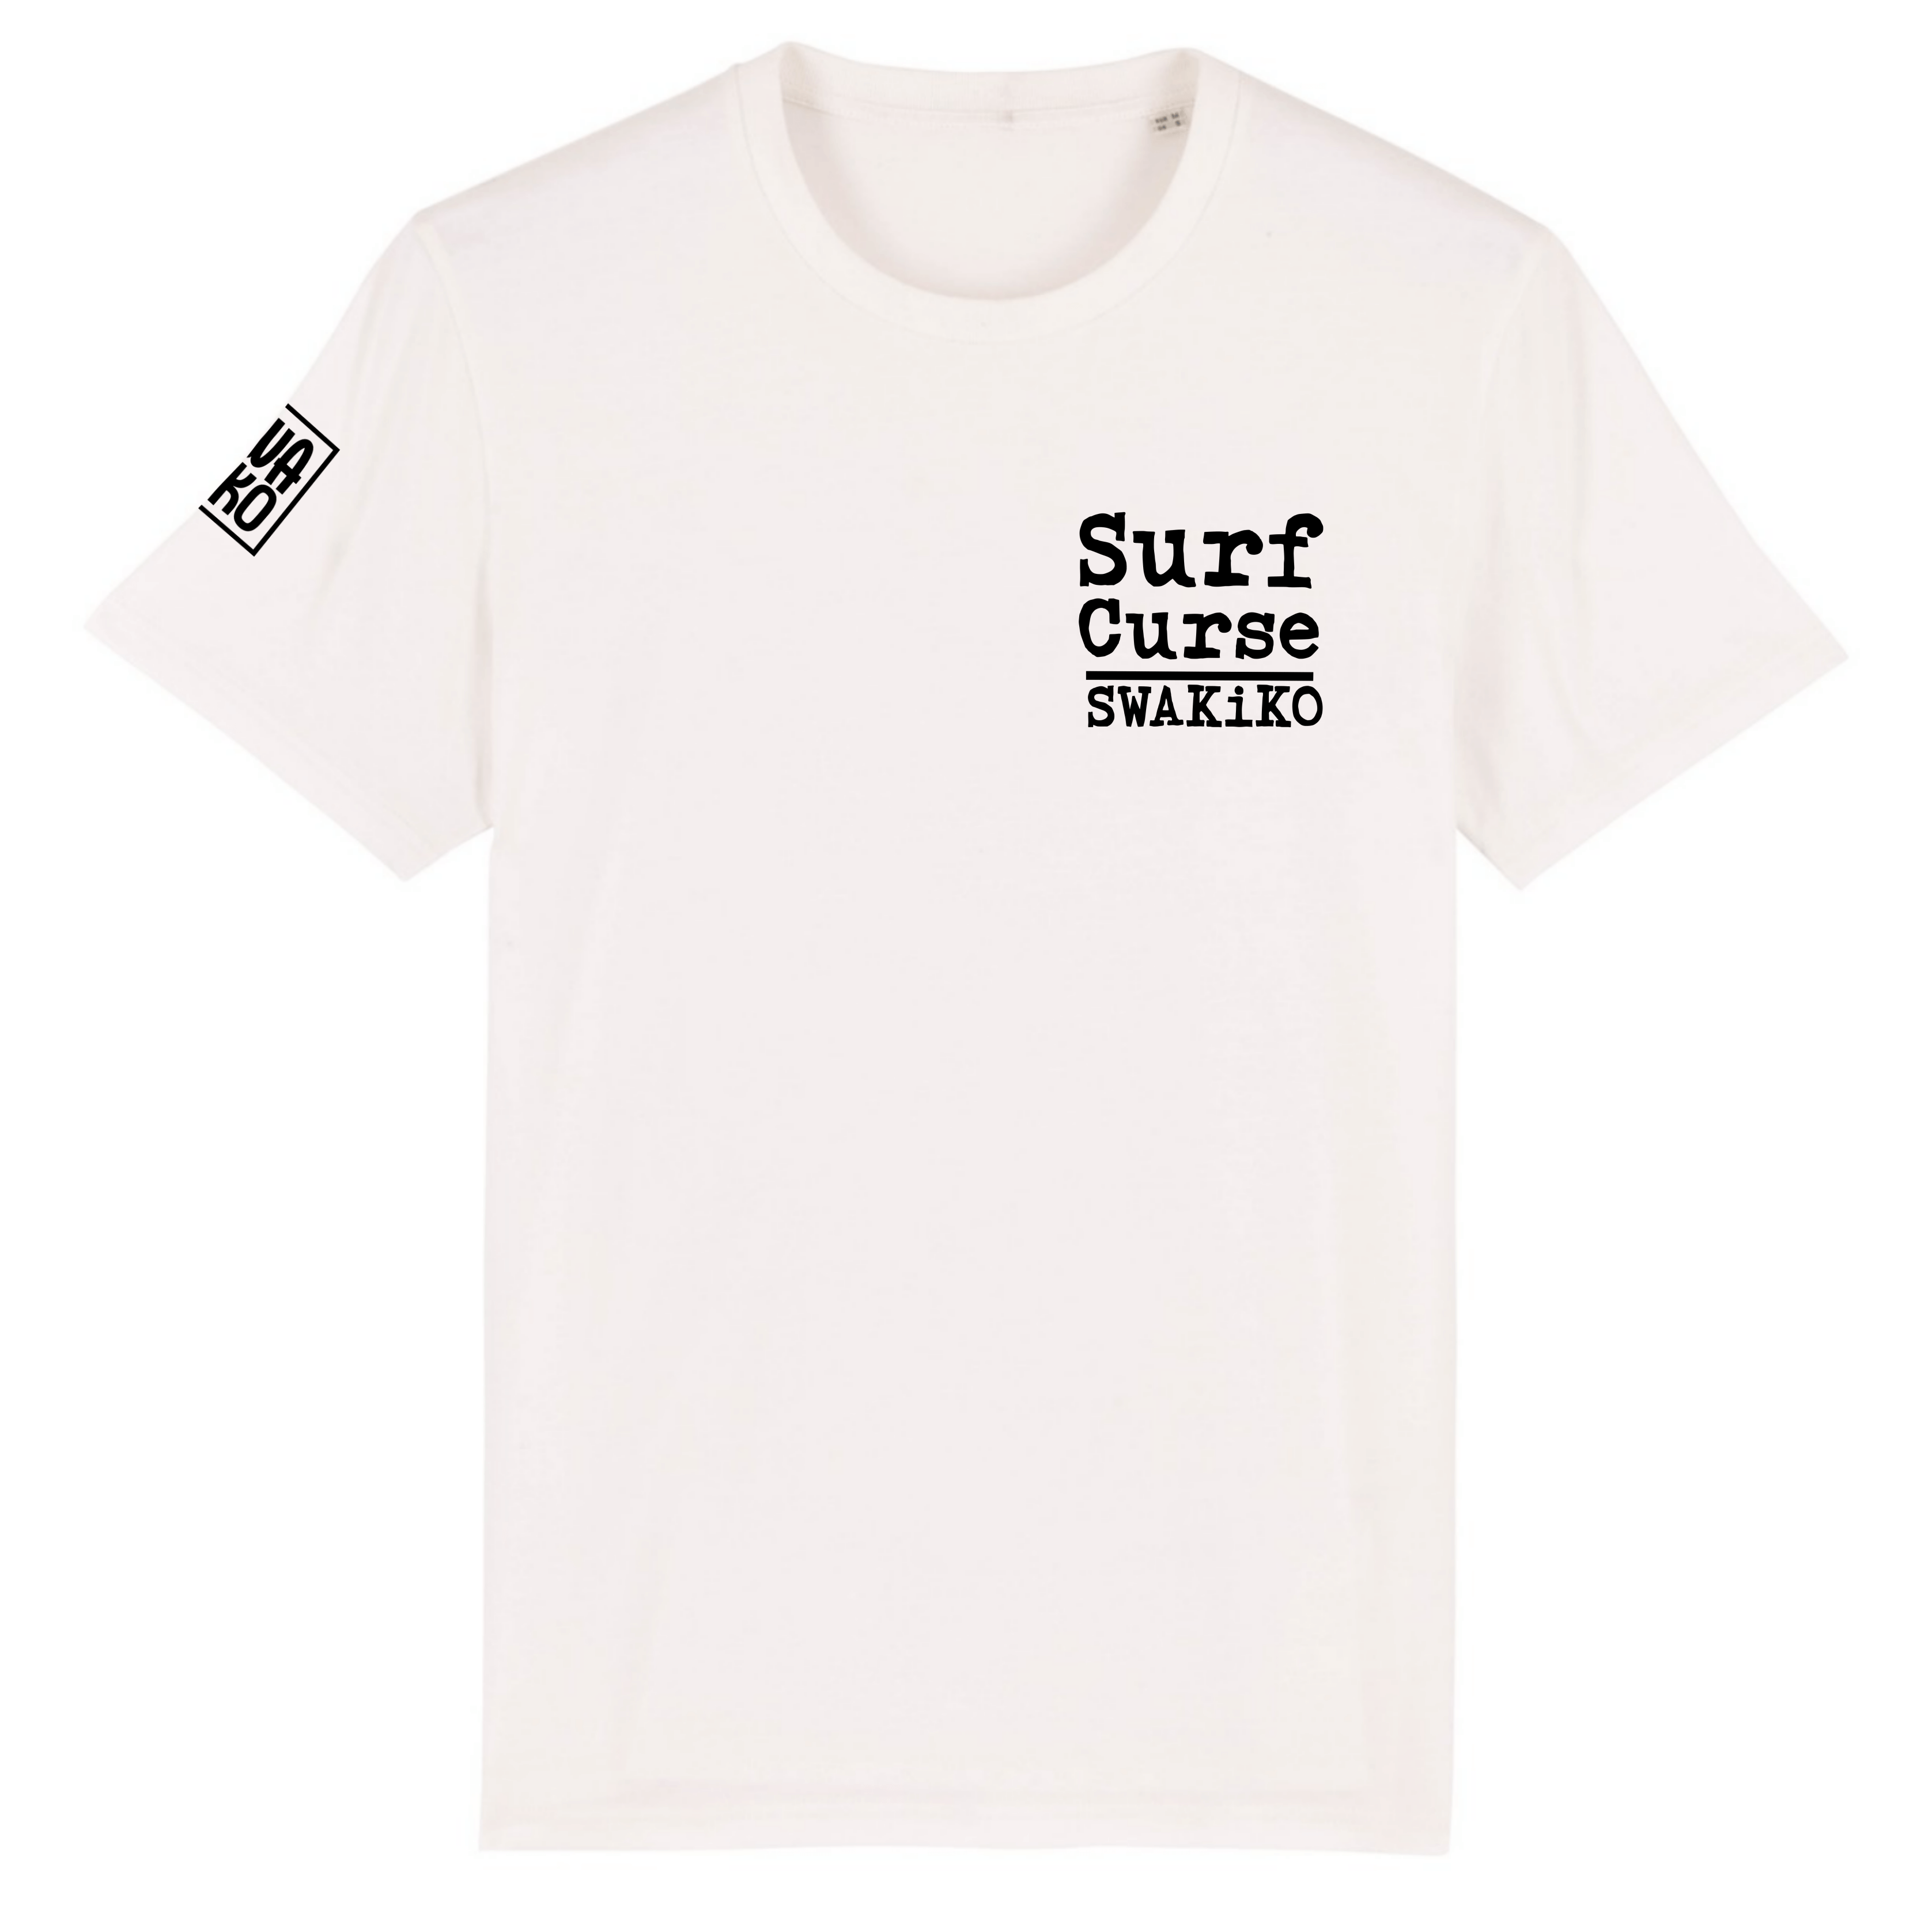 Wit T-shirt met Surf Curse borst logo van Swakiko